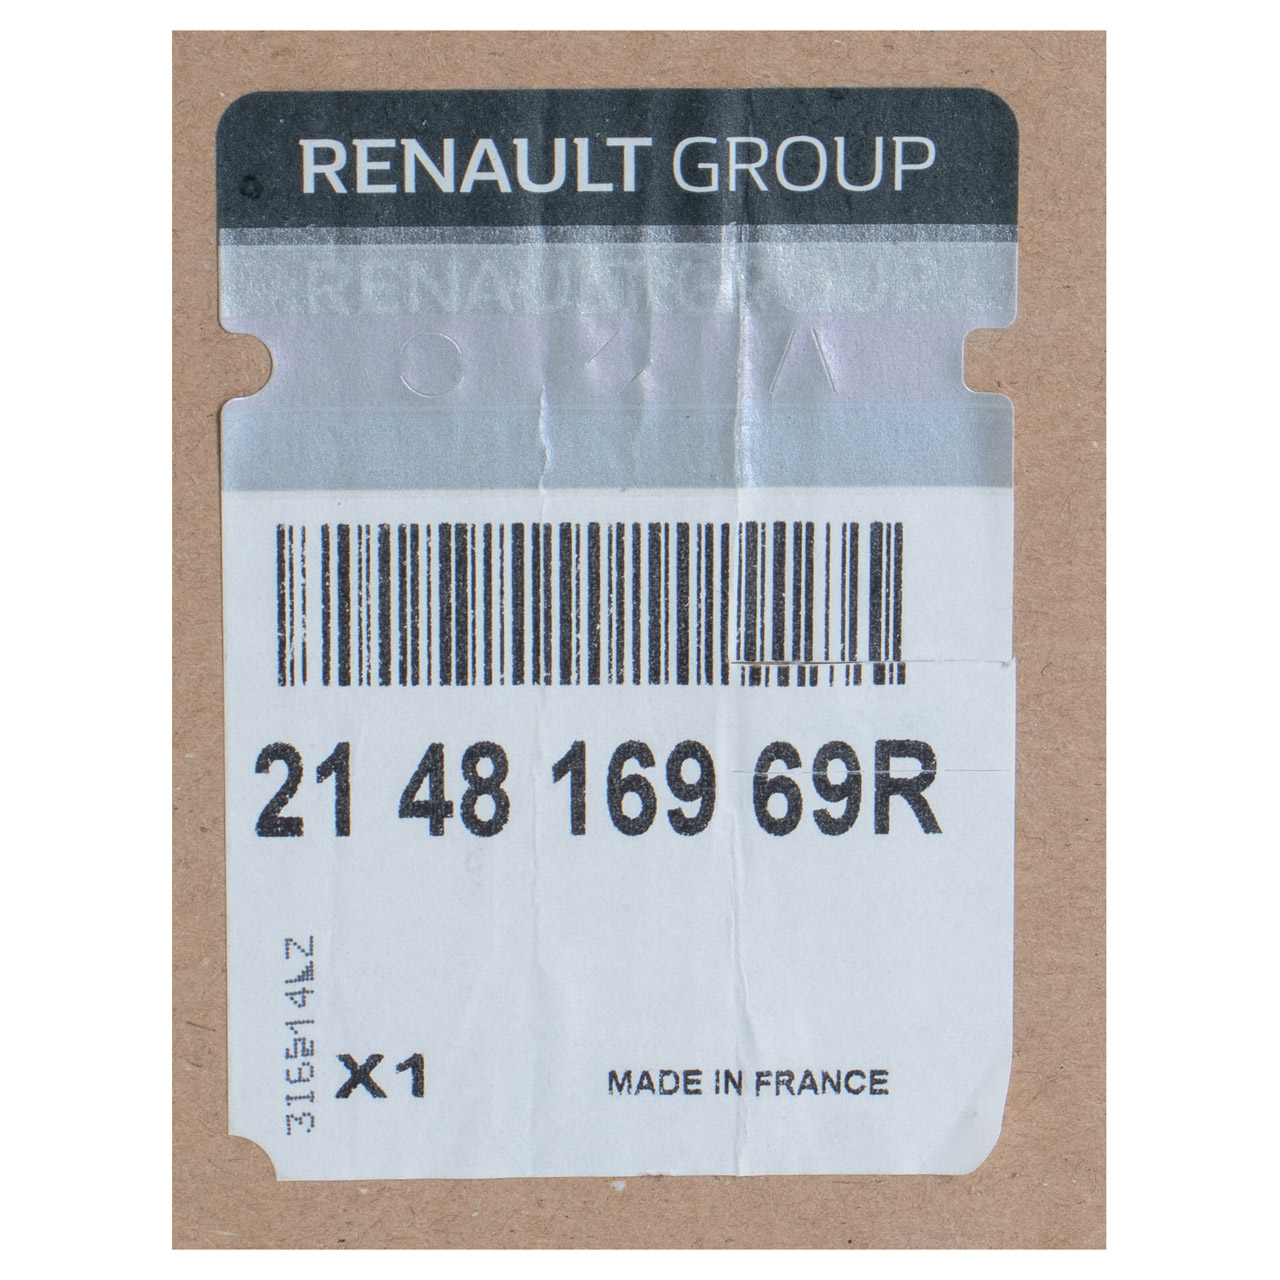 ORIGINAL Renault Motorlüfter Lüftermotor Espace 5 1.6d 1.6/1.8 TCe 214816969R